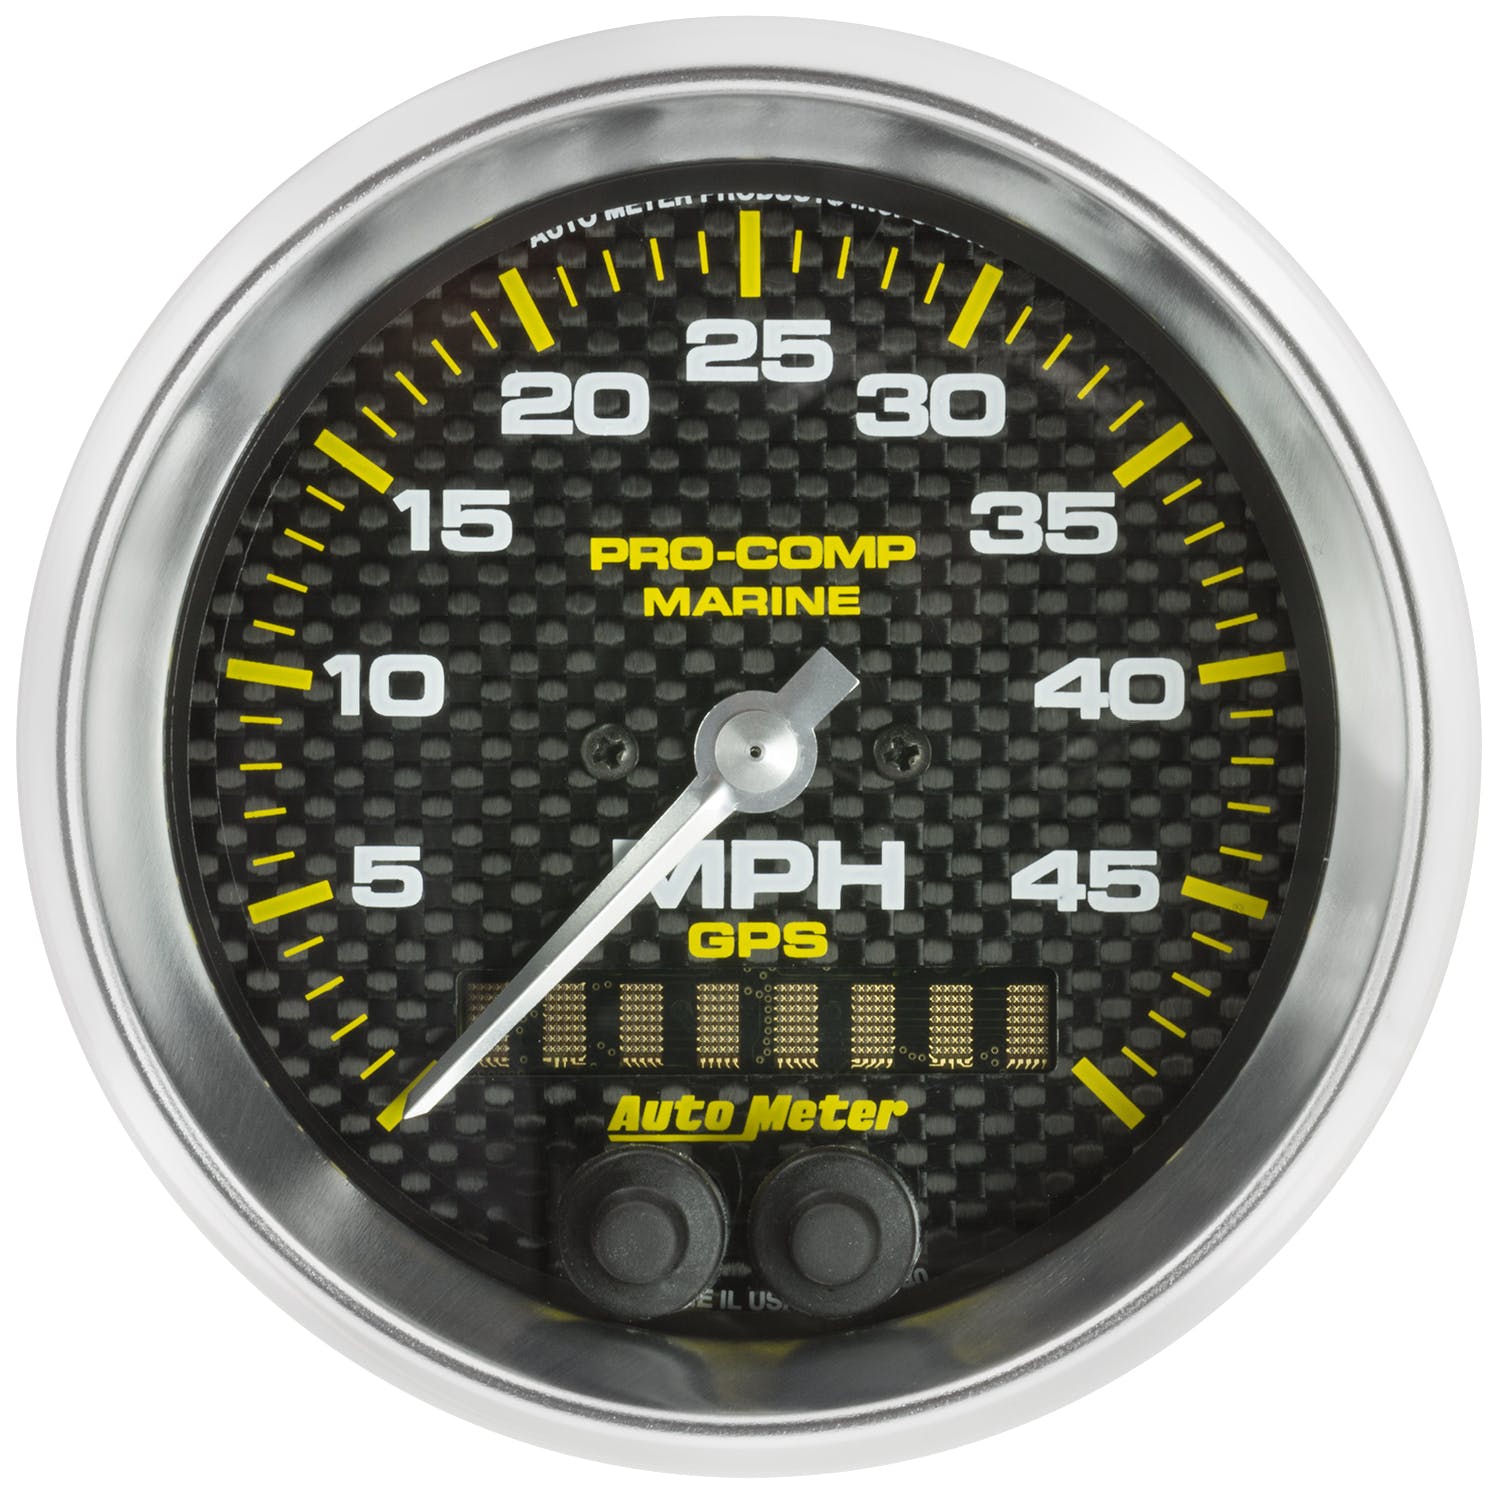 AutoMeter Products 200635-40 Speedometer Gauge 3 3/8, 50MPH, GPS, Marine Carbon Fiber